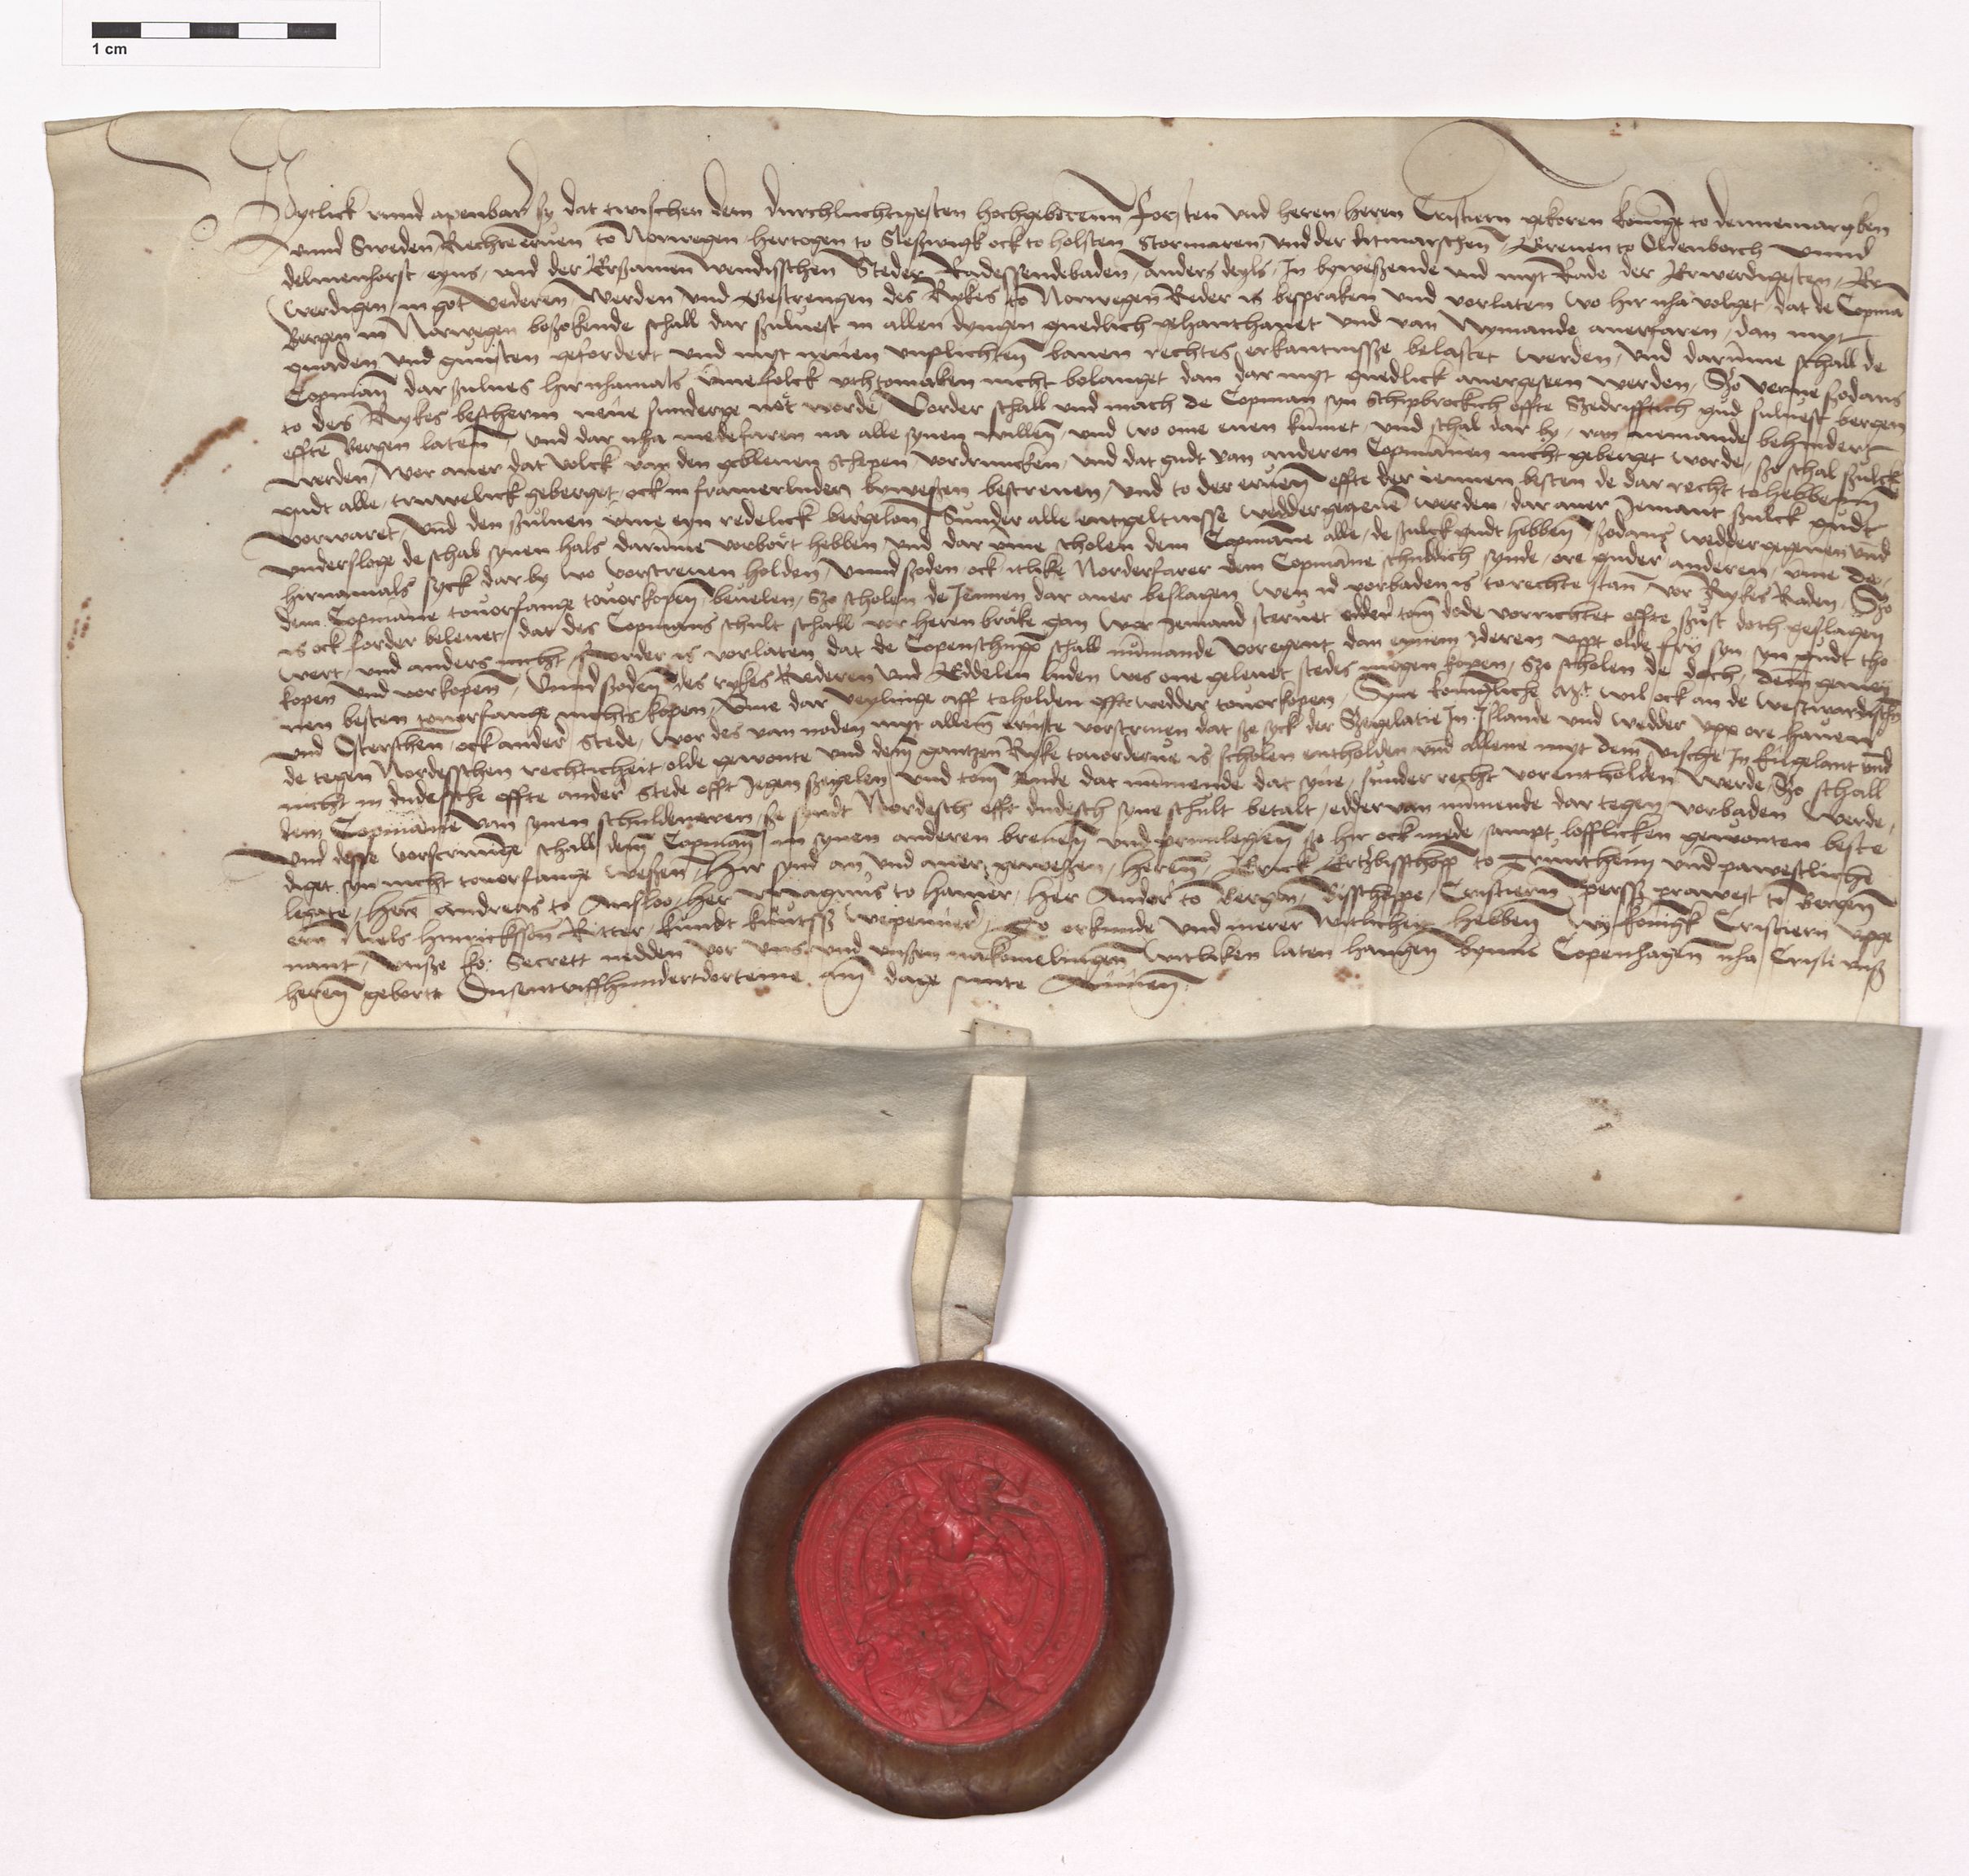 07.1 Urkunden, 3 Auswärtige Beziehungen (Externa), AHL/-/21: Norwegen (Norvagica); Kontor zu Bergen, 1247-1747, s. 880